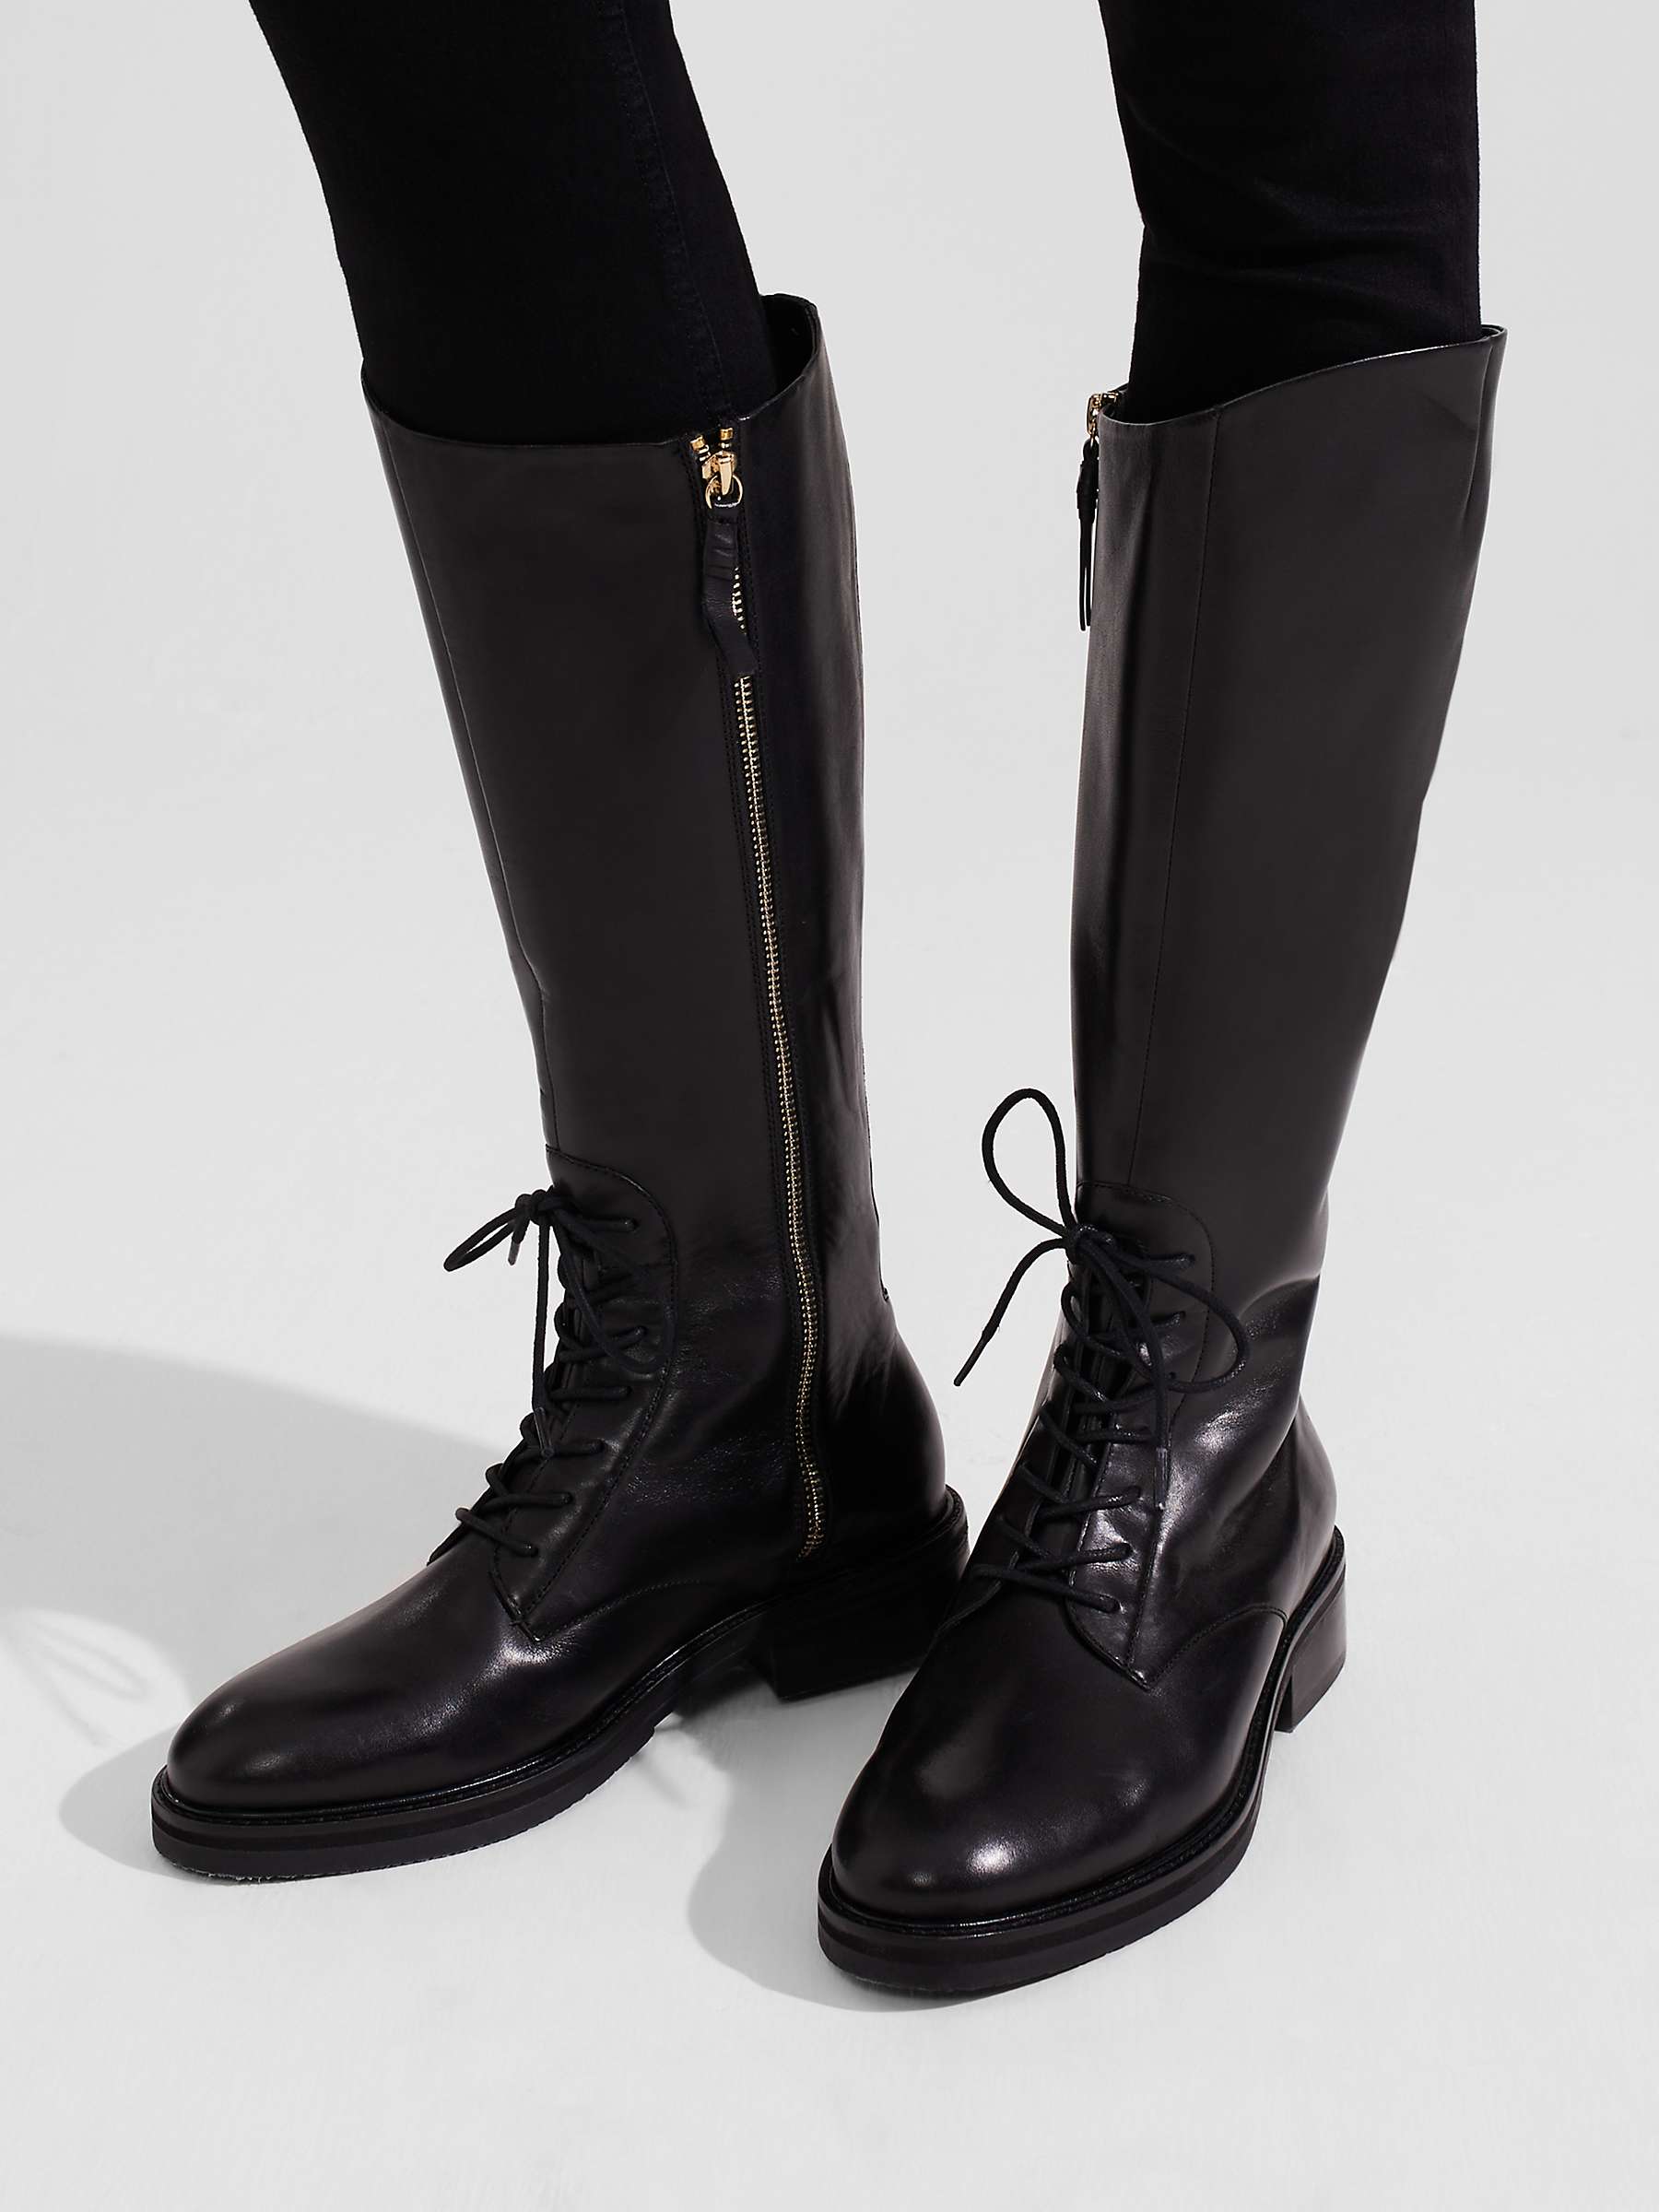 Hobbs Laurel Leather Knee Boots, Black at John Lewis & Partners